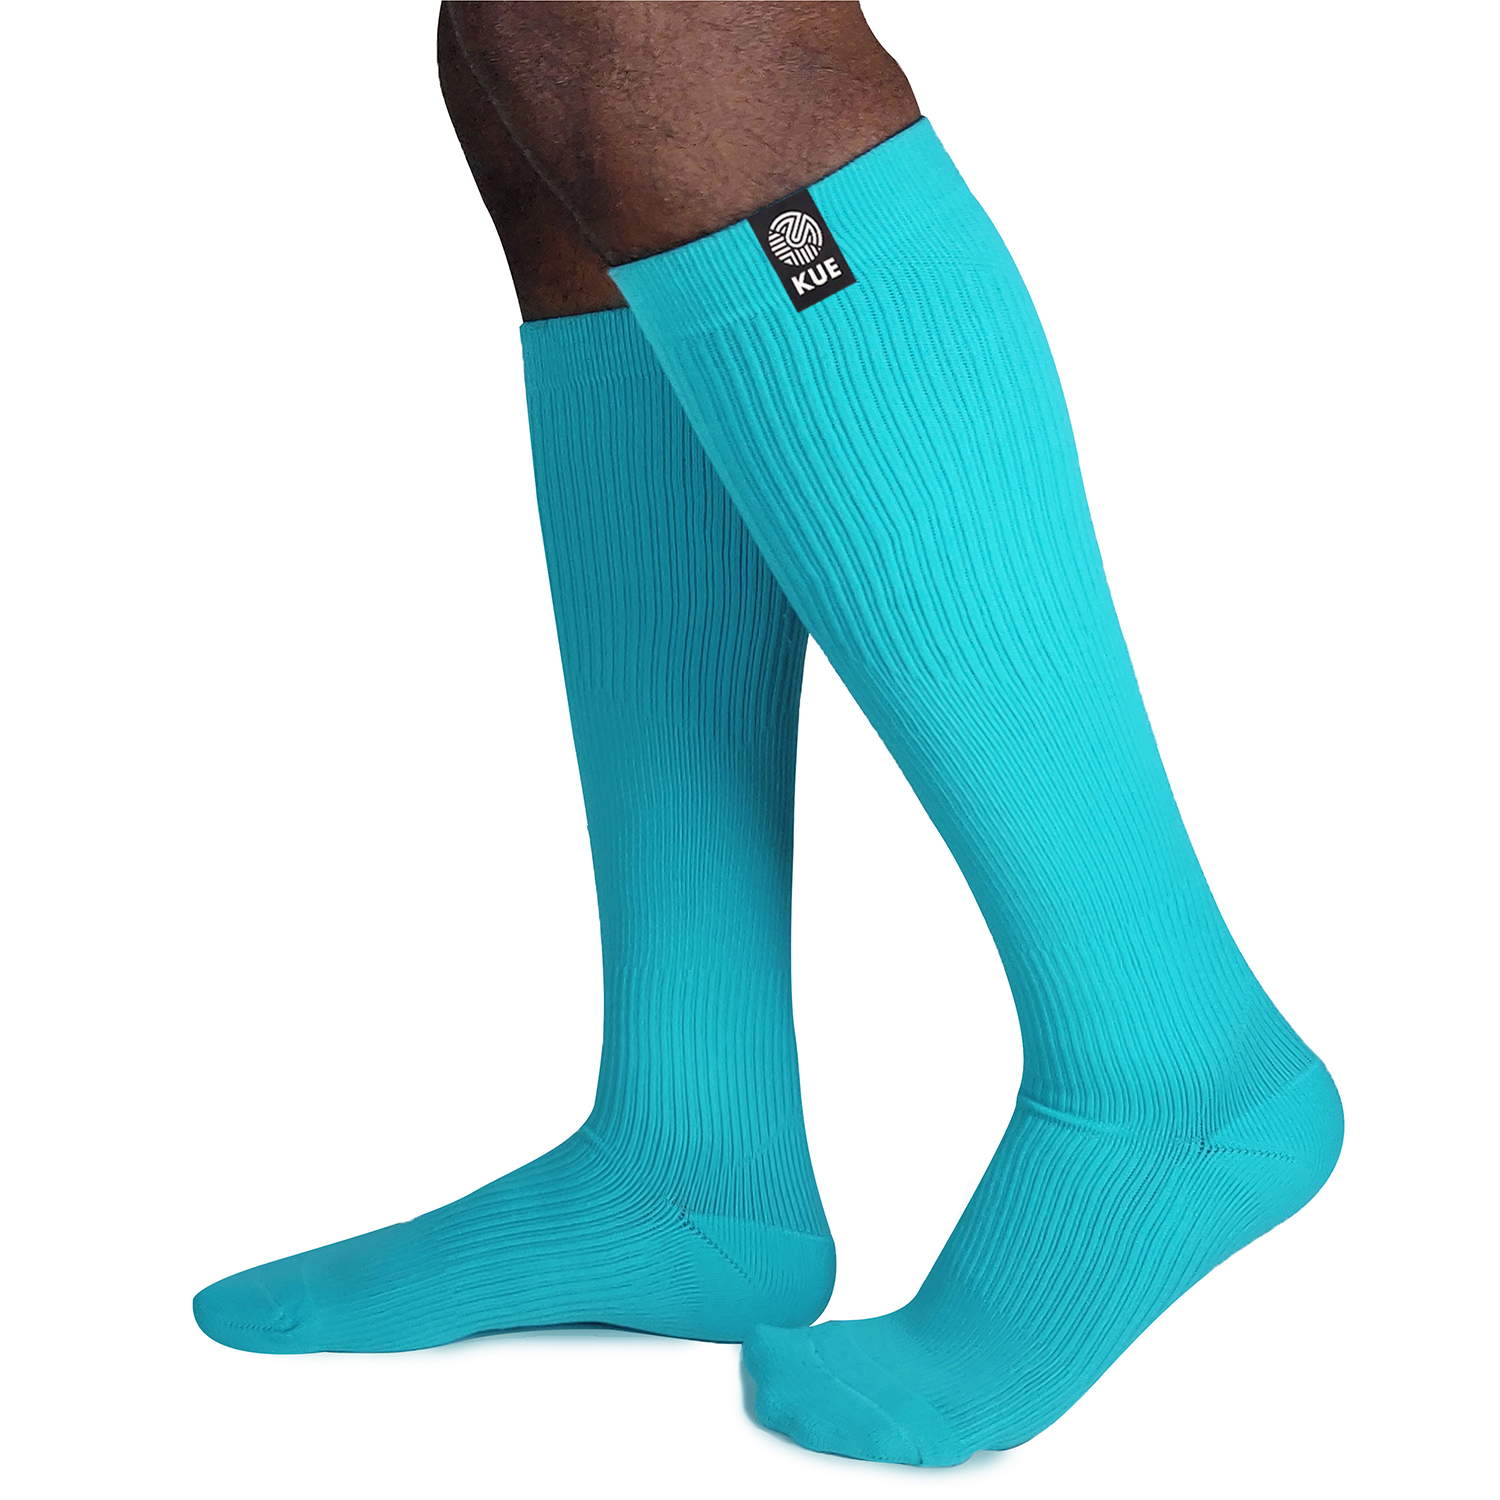 Blue Graduated Compression Knee Length Socks (18-21mmHg)